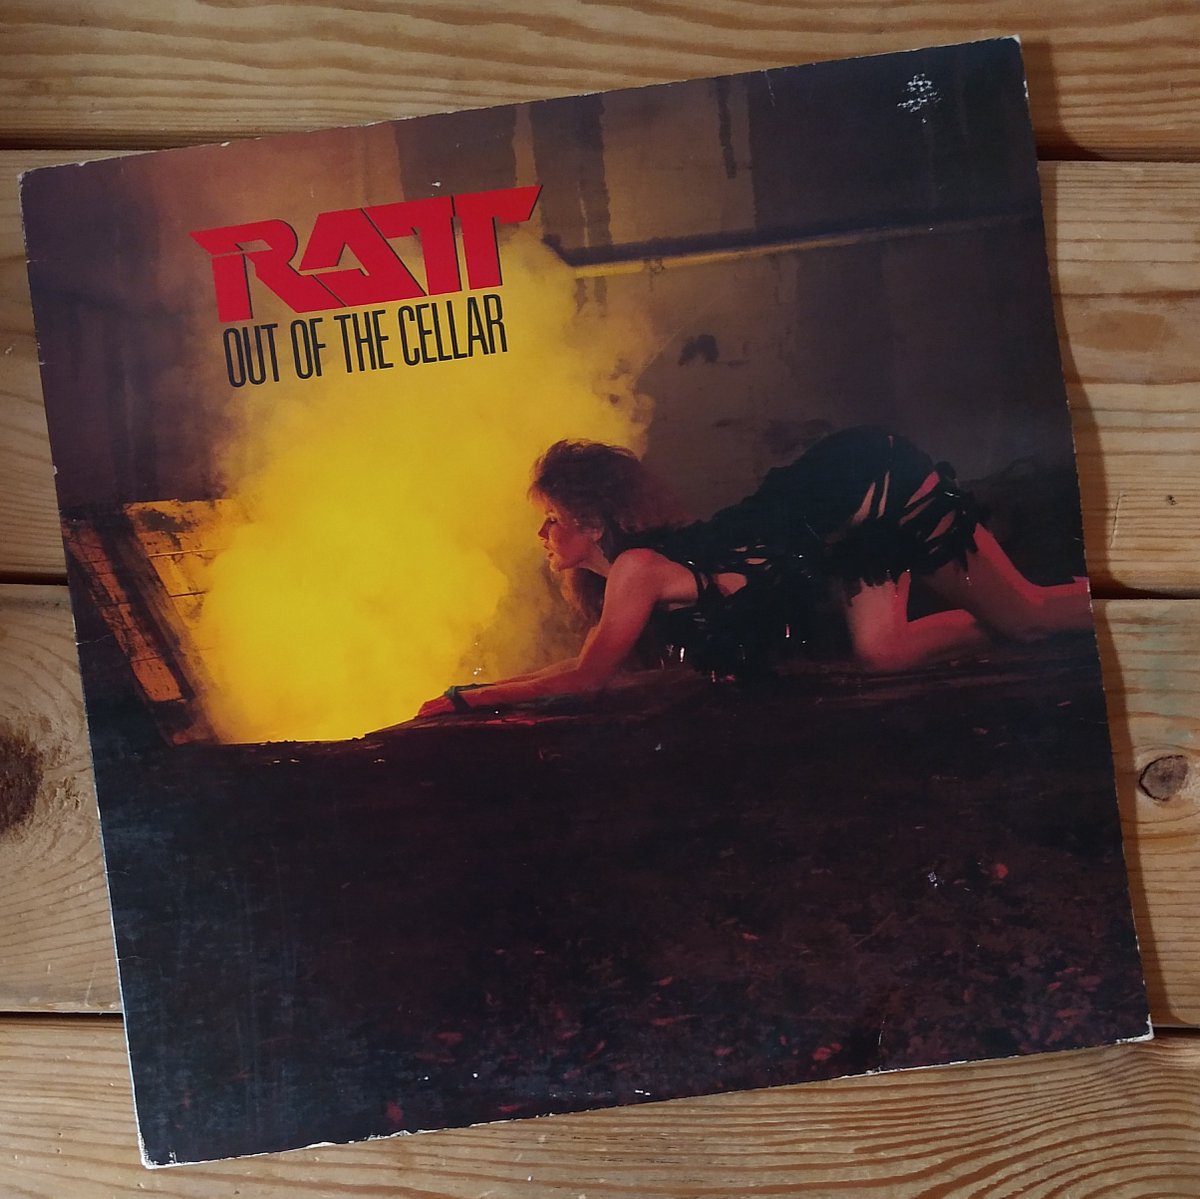 Morning Spin-#RATT #vinyl #vinylcommunity #vinylcollector #vinylcollection #vinylrecords